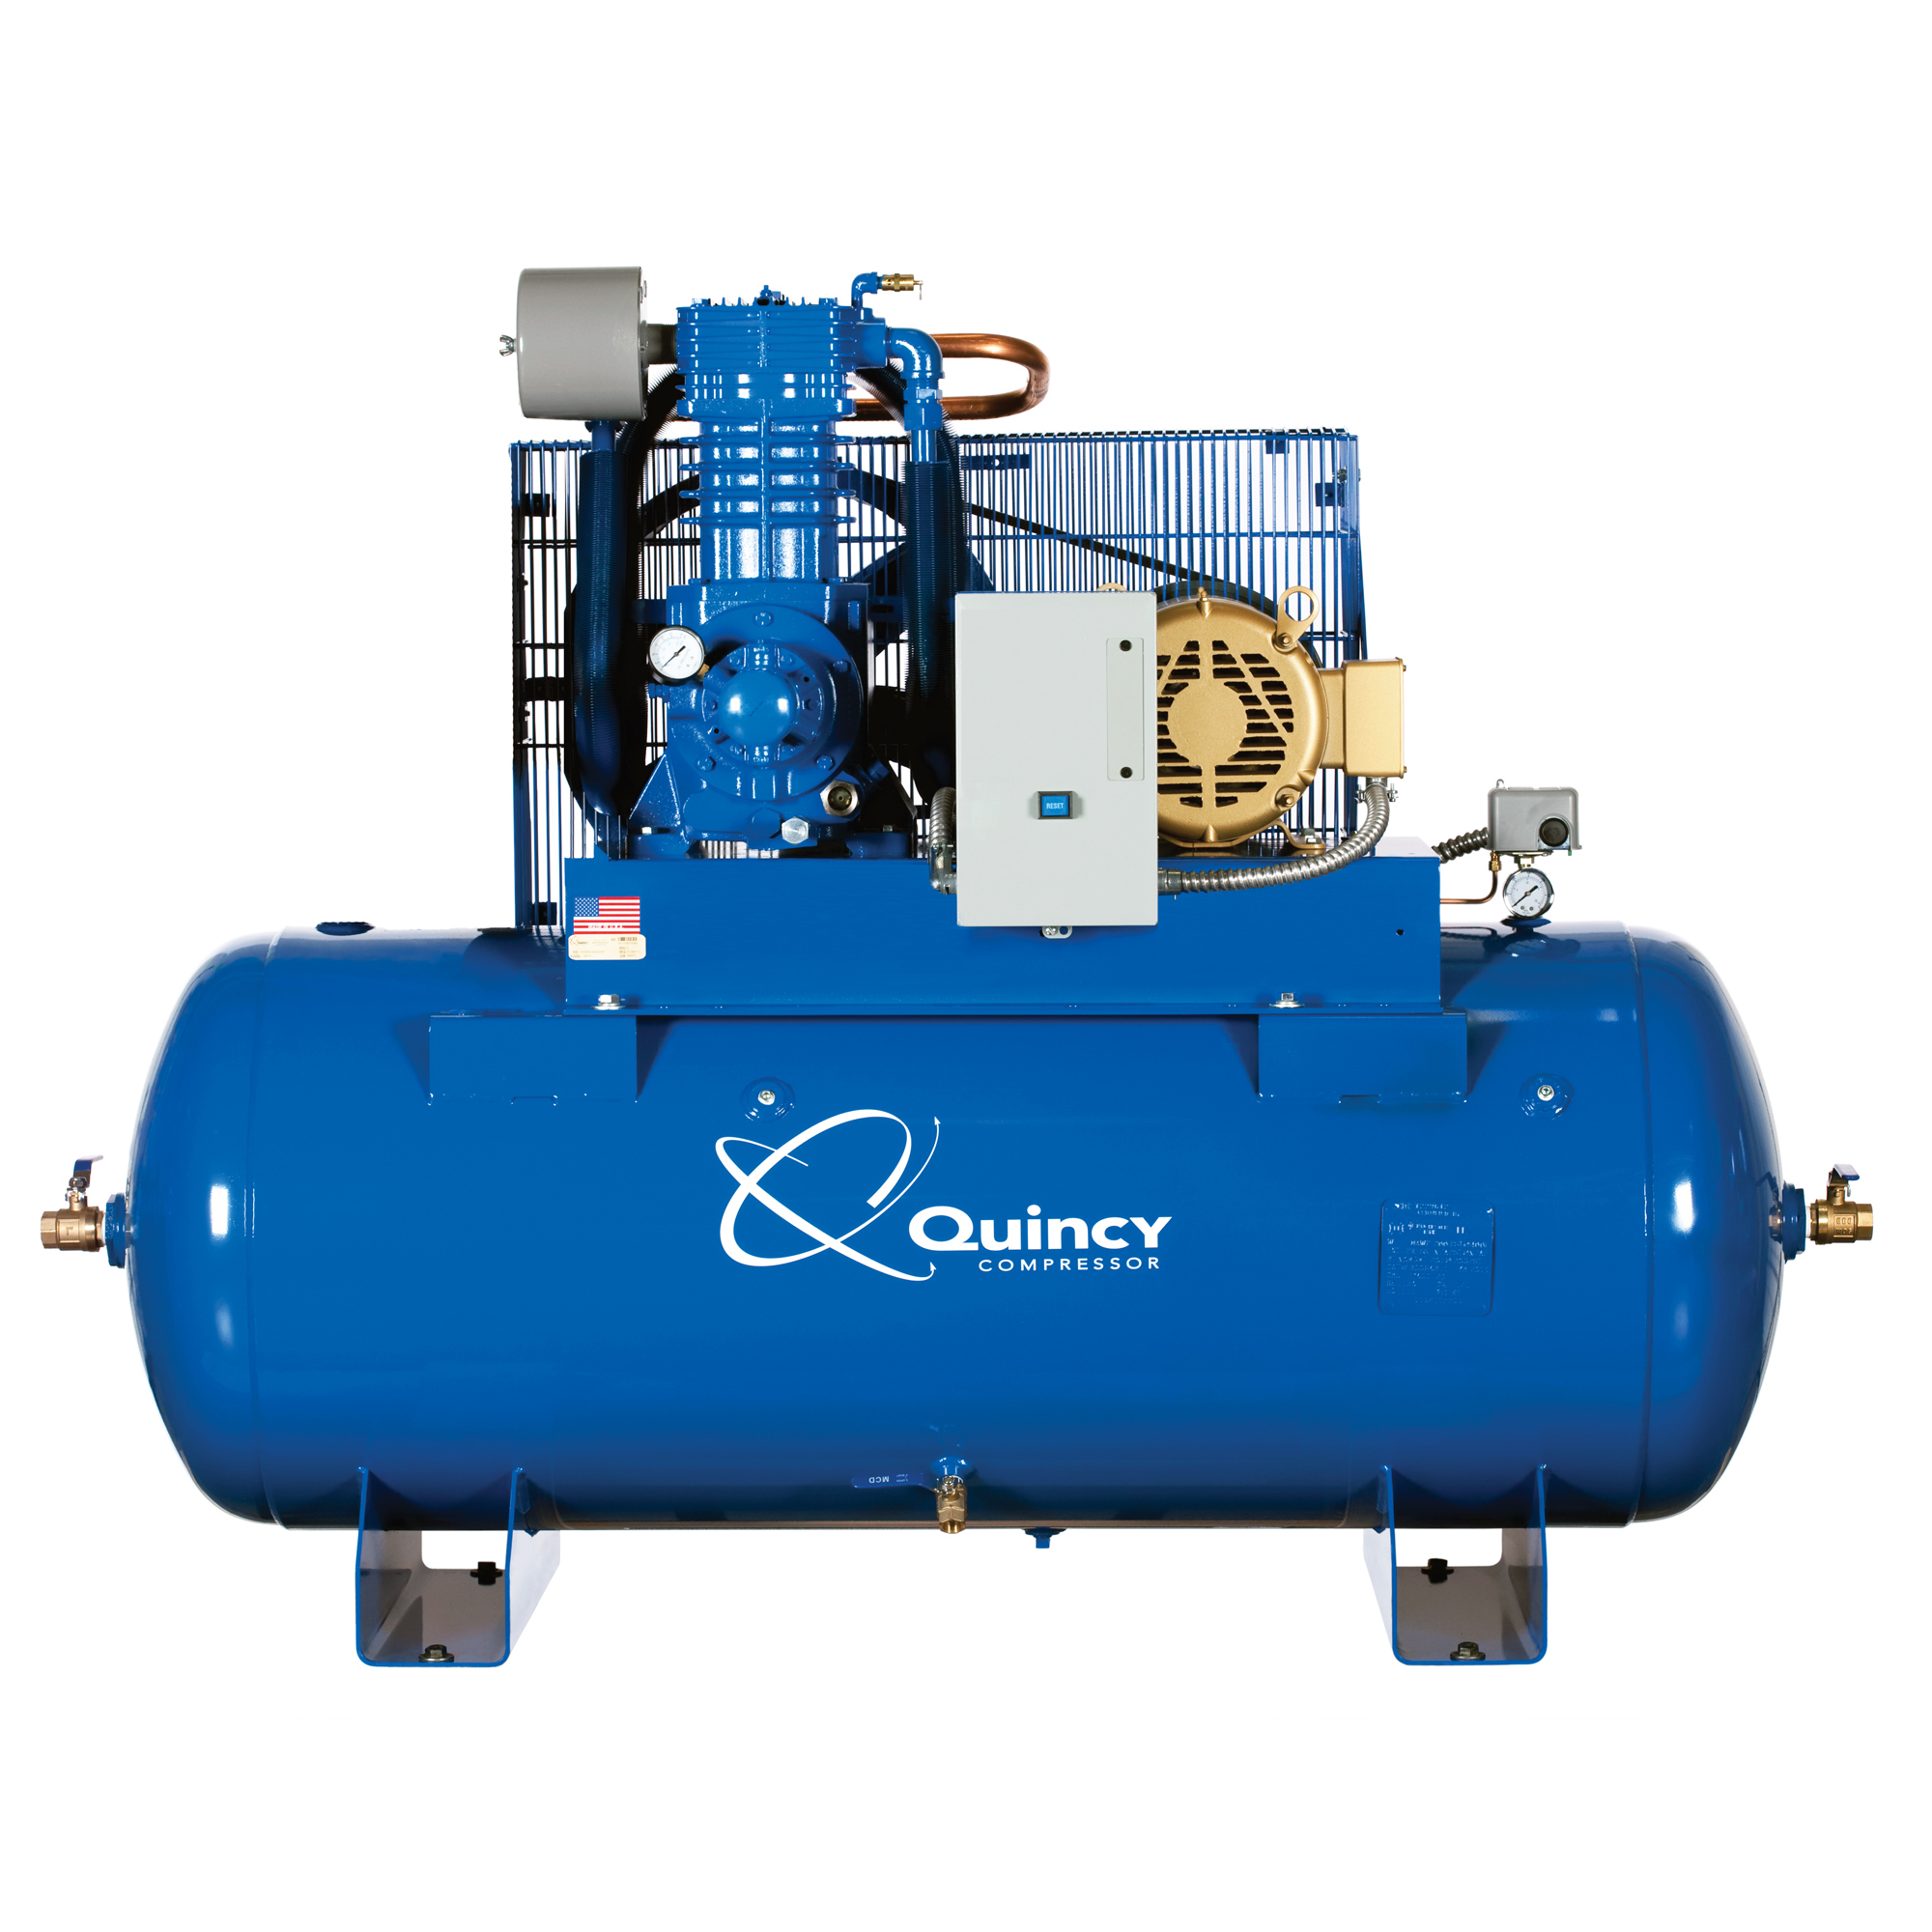 Quincy Compressor, QP1 5H 80G 2S Air Compressor 230V 1ph H MAX, Horsepower 5 HP, Air Tank Size 80 Gal, Volts 230 Model 5531S80HCAM